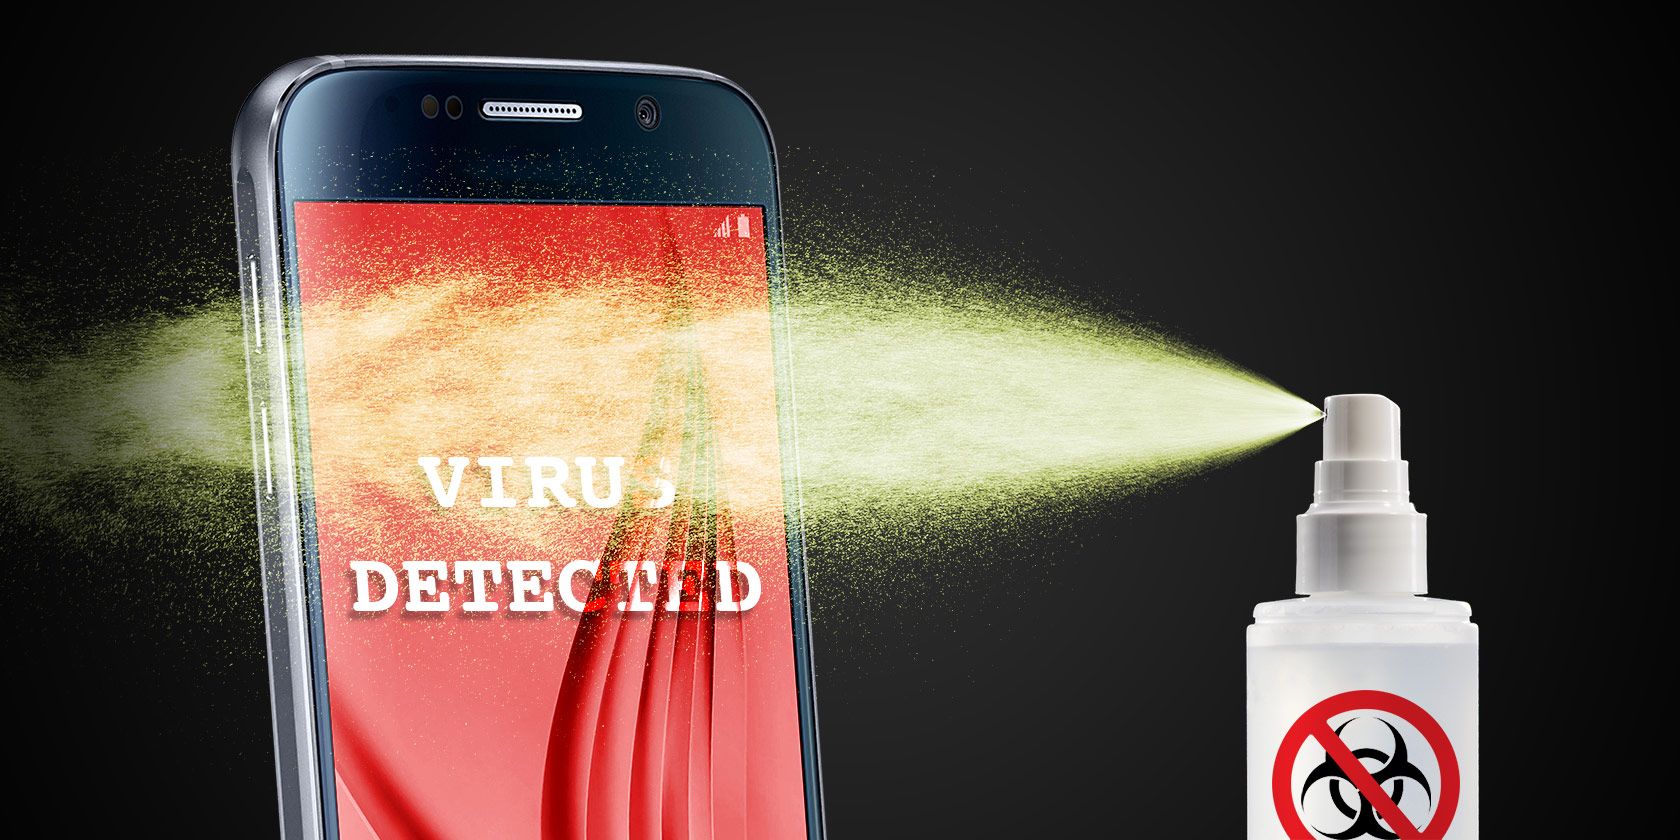 Anti biohazard spray spraying an Android phone with a virus warning